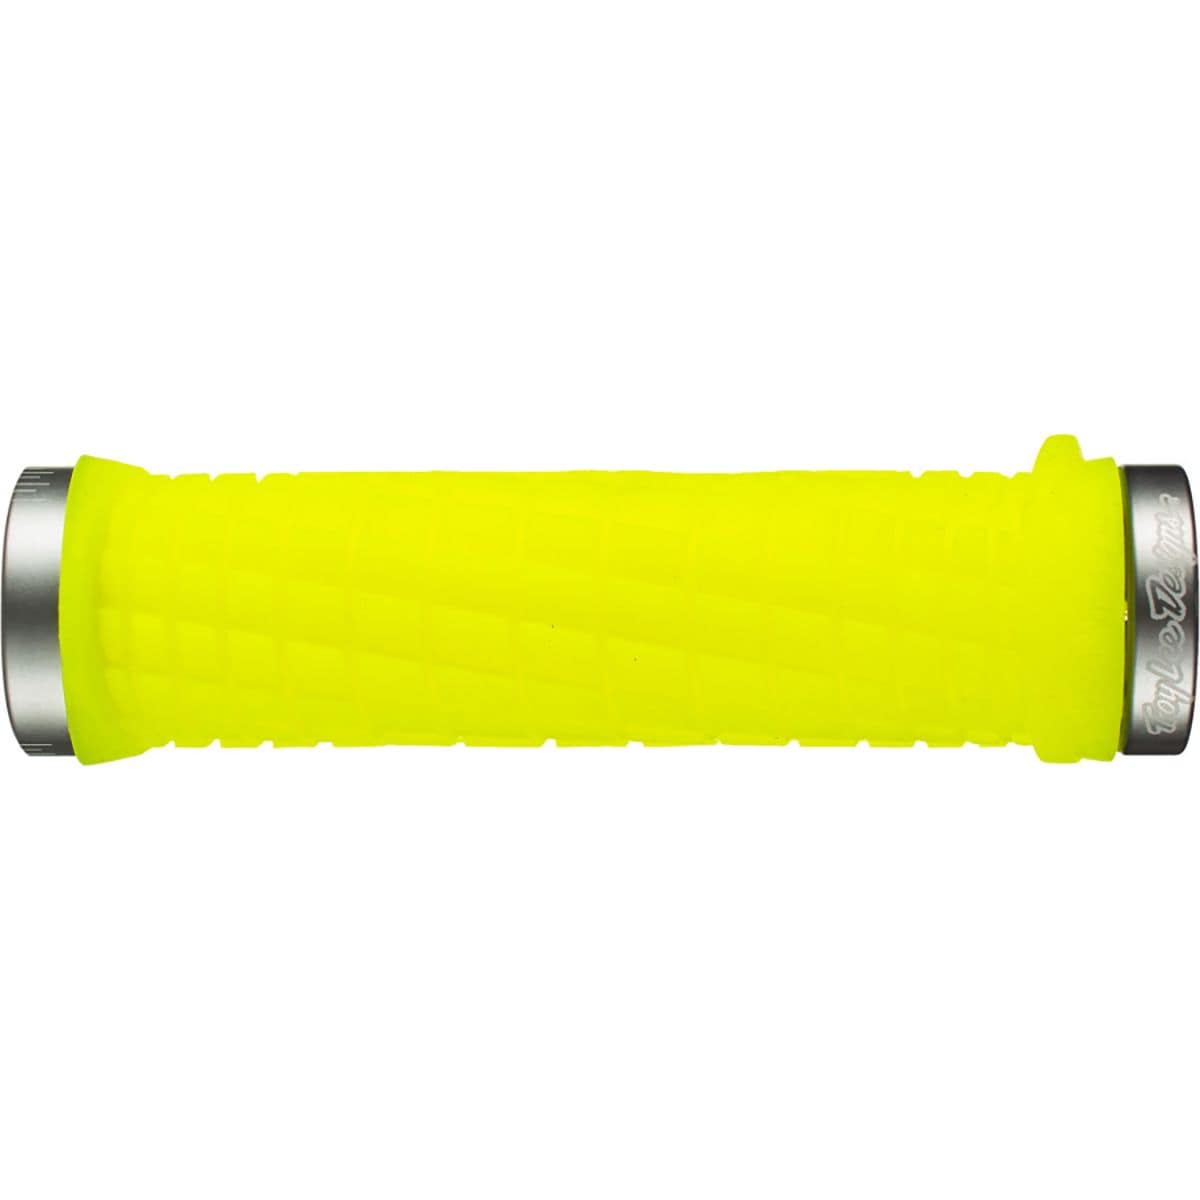 Troy Lee Designs ODI Grips Yellow/Grey, One Size